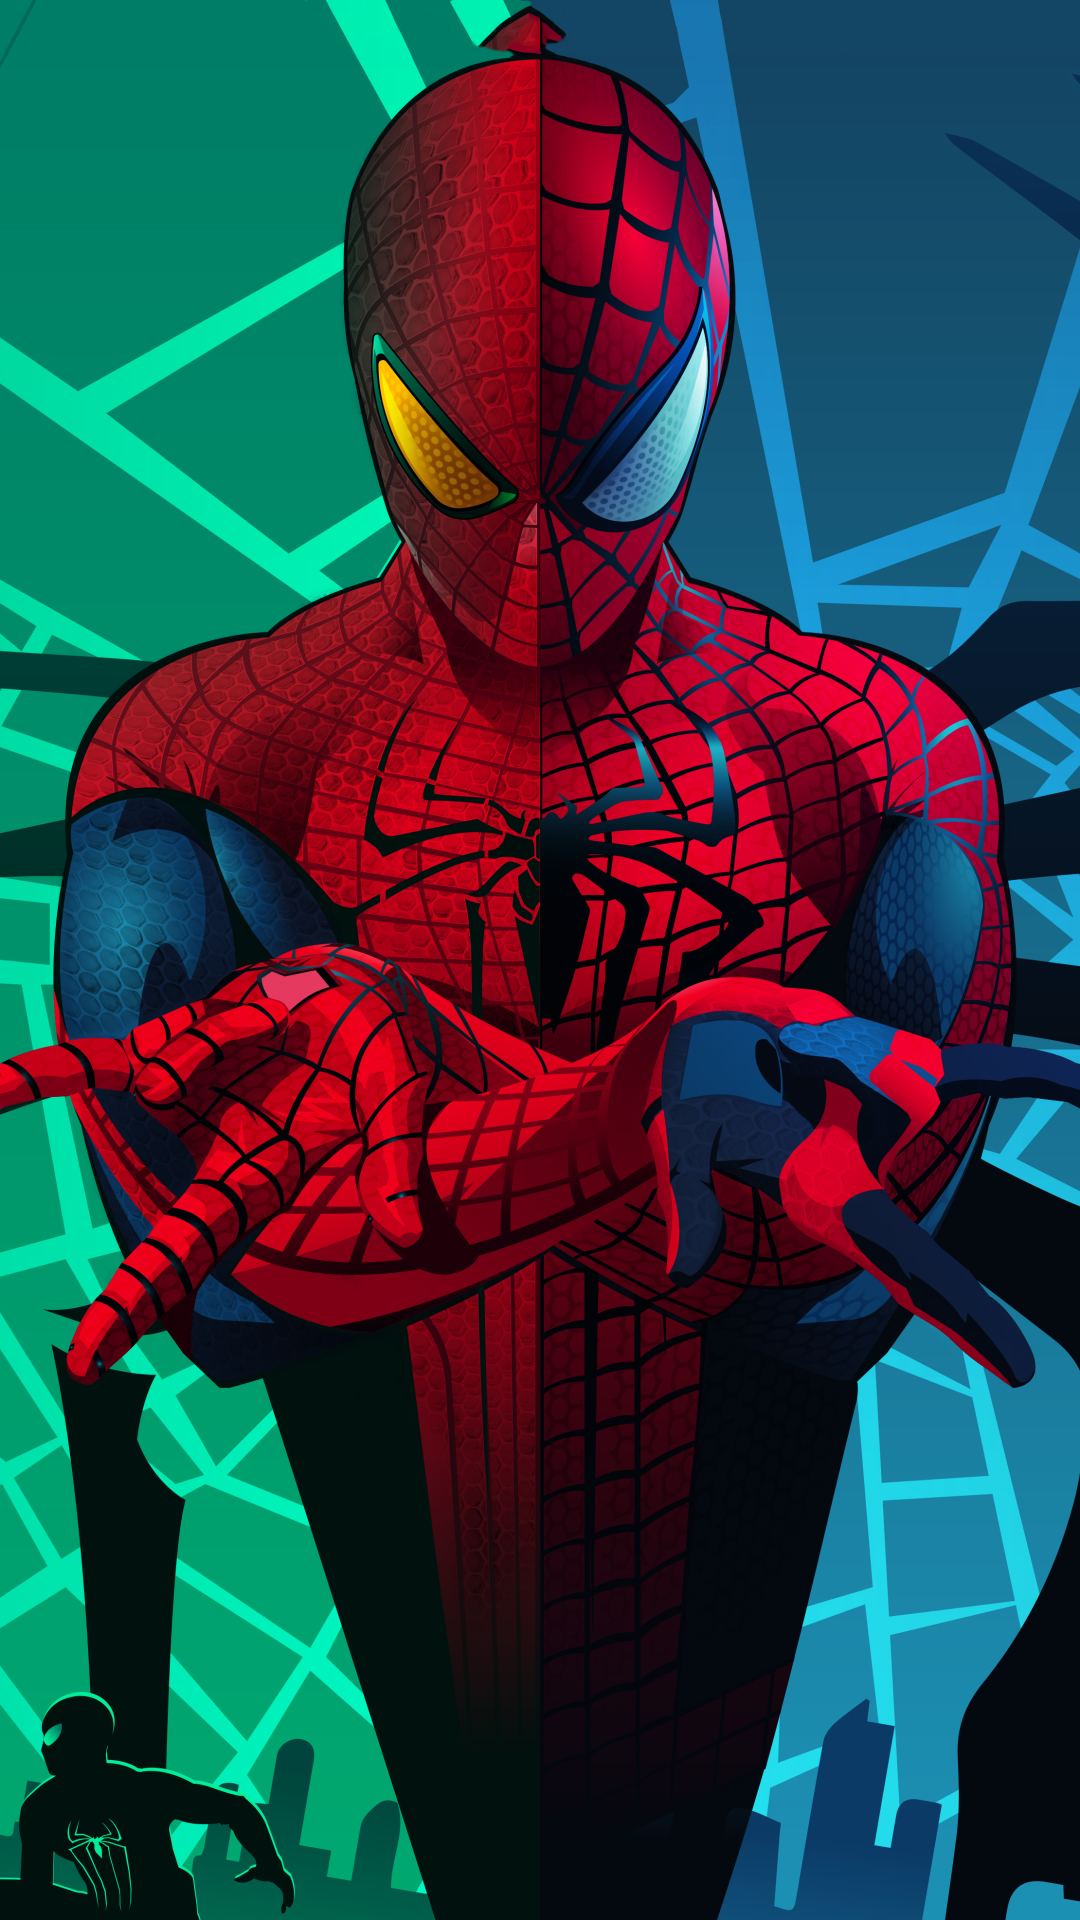 Descarga gratuita de fondo de pantalla para móvil de Películas, El Sorprendente Hombre Araña, Hombre Araña, Spider Man, Peter Parker, El Sorprendente Hombre Araña 2: La Amenaza De Electro, El Increible Hombre Araña 2.